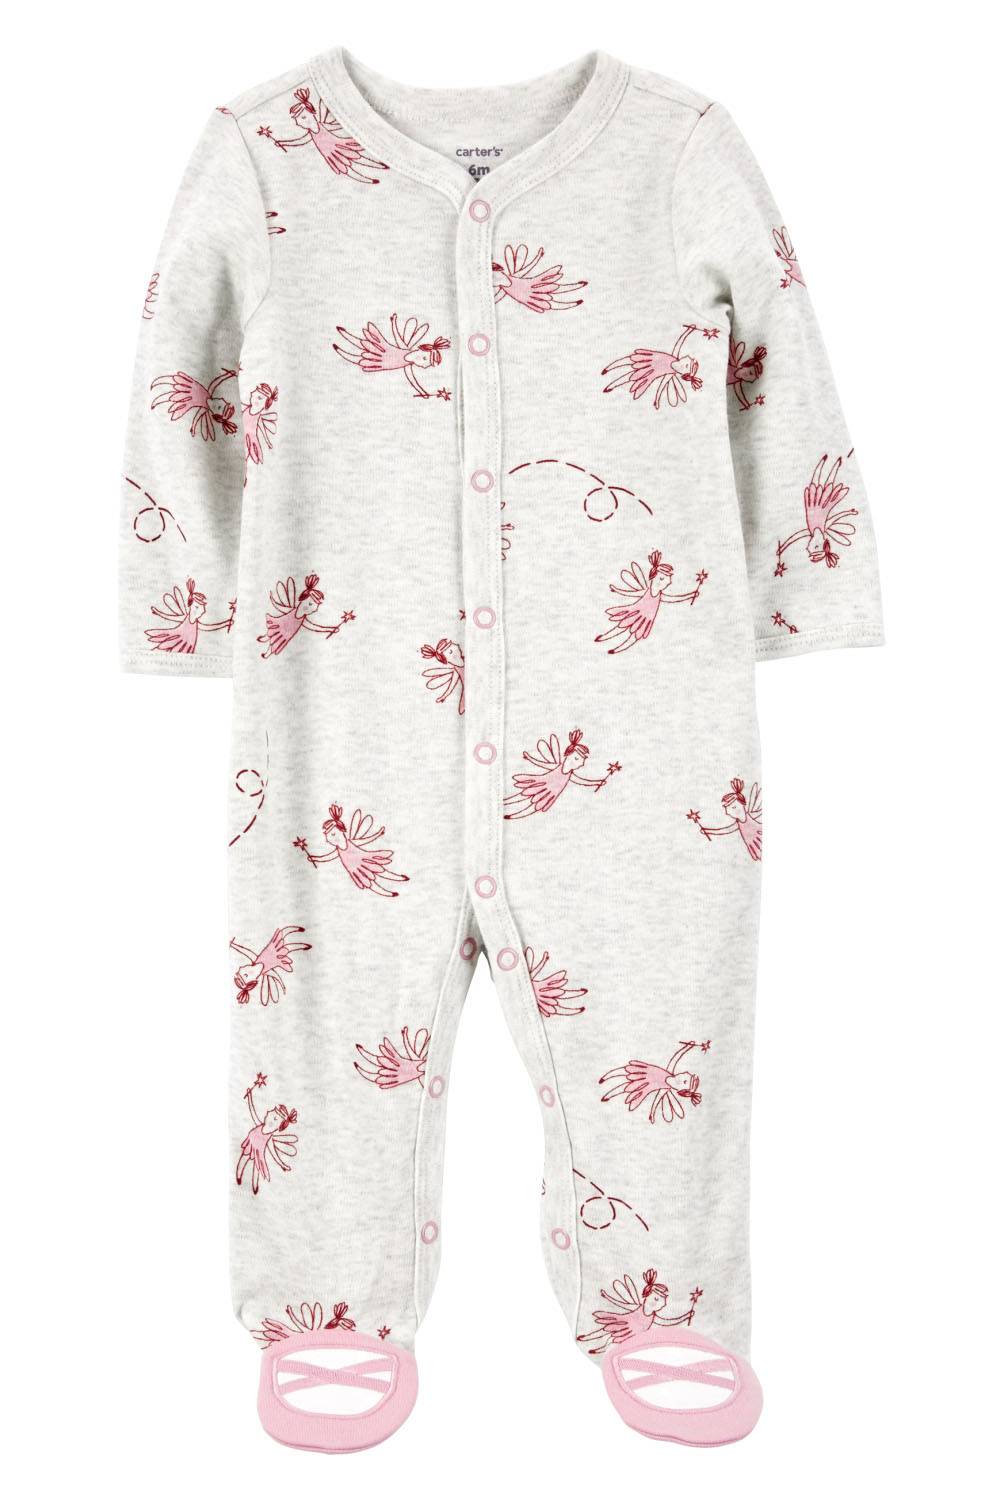 Pijama tricolor estampado  Pijama bebe, Bebe, Pijama de algodón